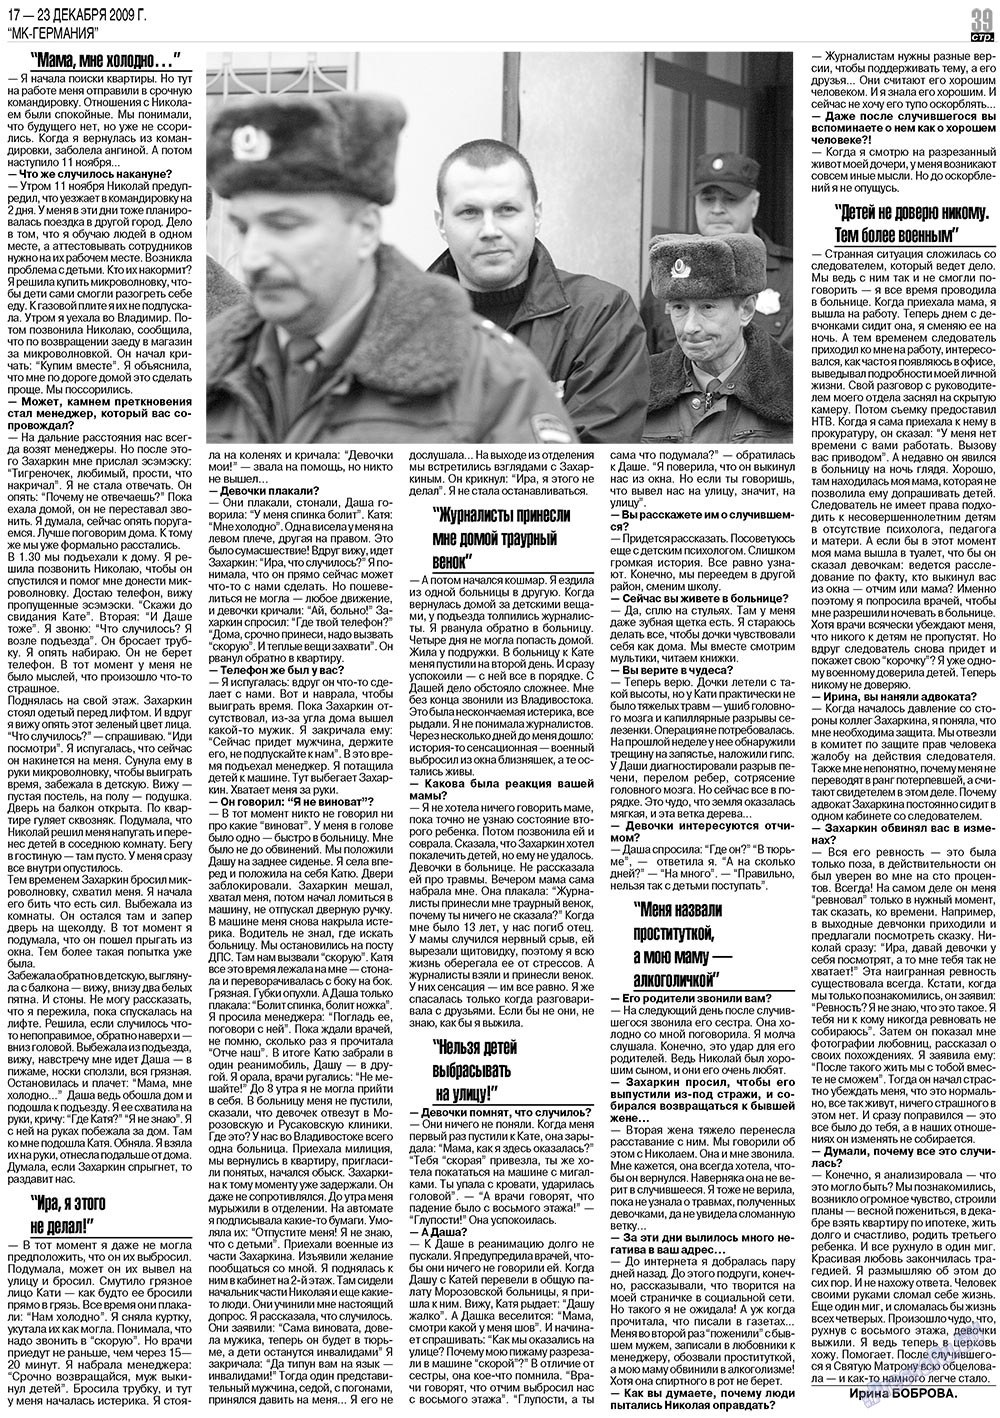 МК-Германия, газета. 2009 №51 стр.39